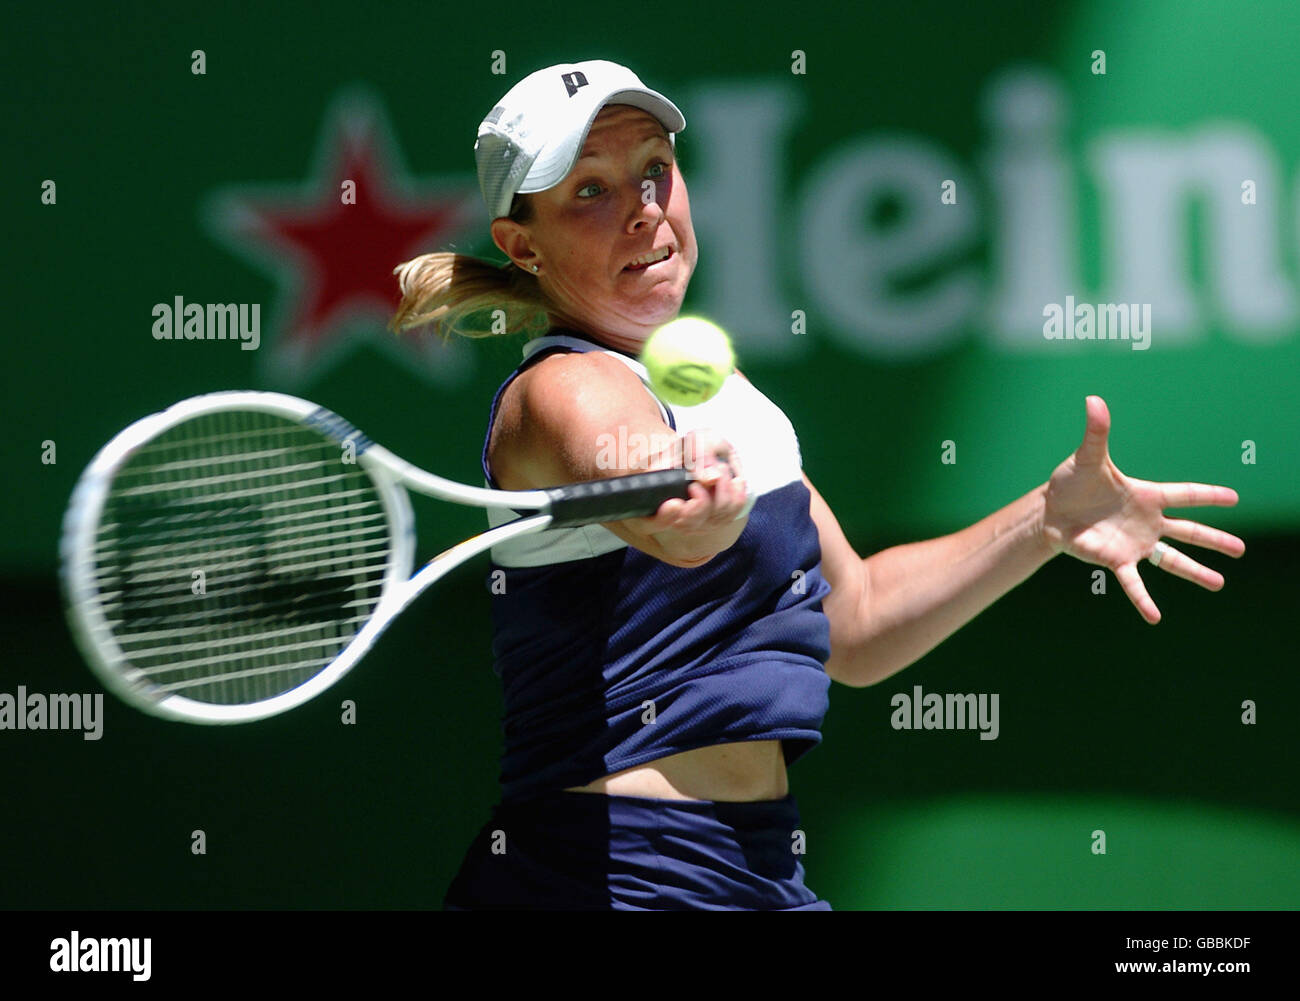 Tennis - Australian Open 2004 - Quarter Final. Lisa Raymond of USA in action against Patty Schnyder of Switzerland Stock Photo